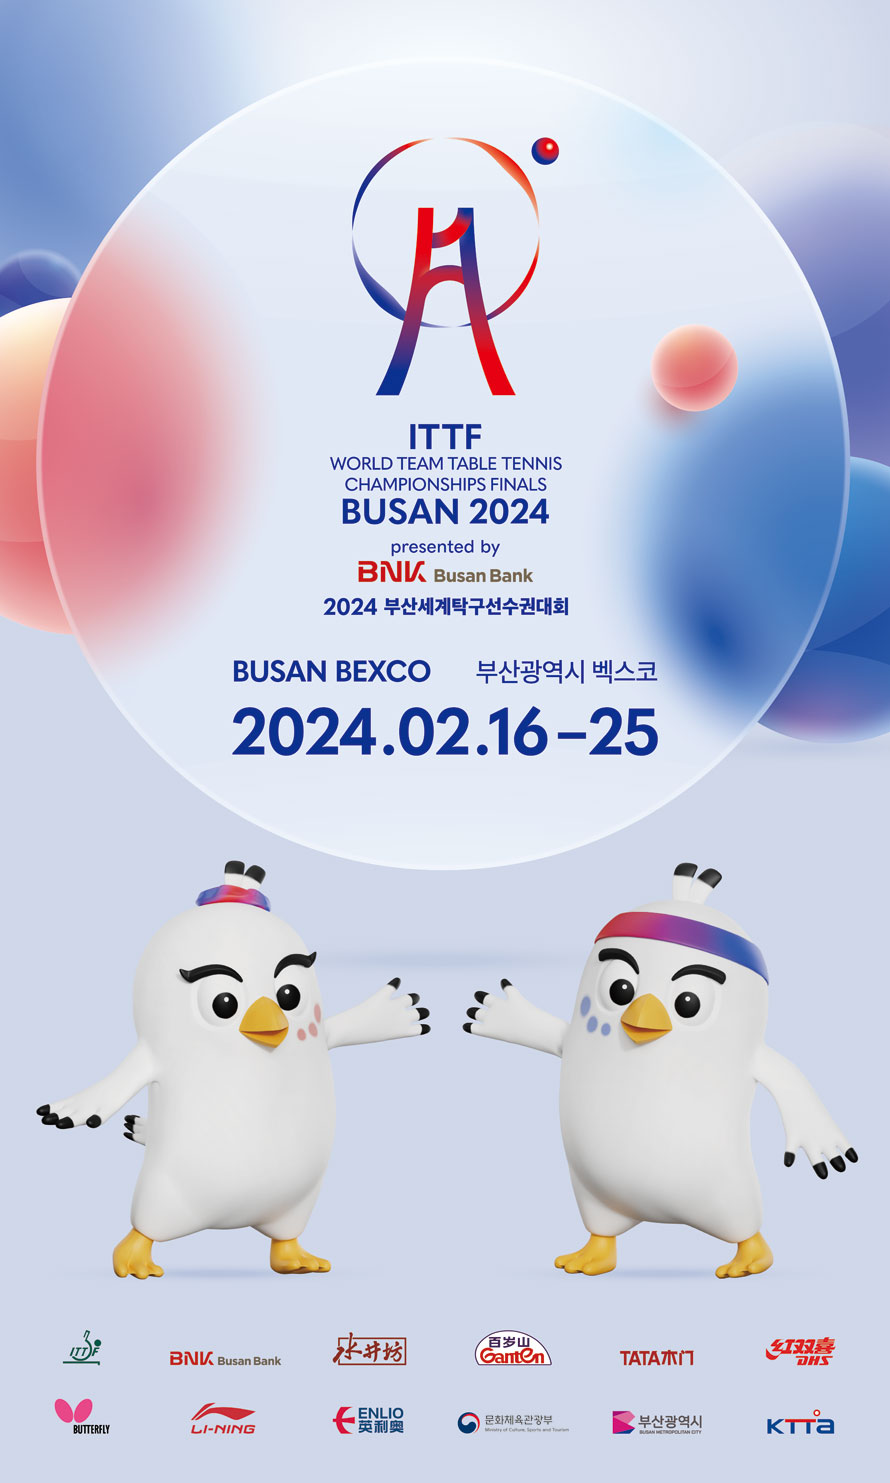 ITTF 
World Team Table Tennis Championships Finals
Busan 2024 presented by BNK Busan Bank
2024 부산세계탁구선수권대회
BUSAN BEXCO 부산광역시 벡스코
2024.02.16-25